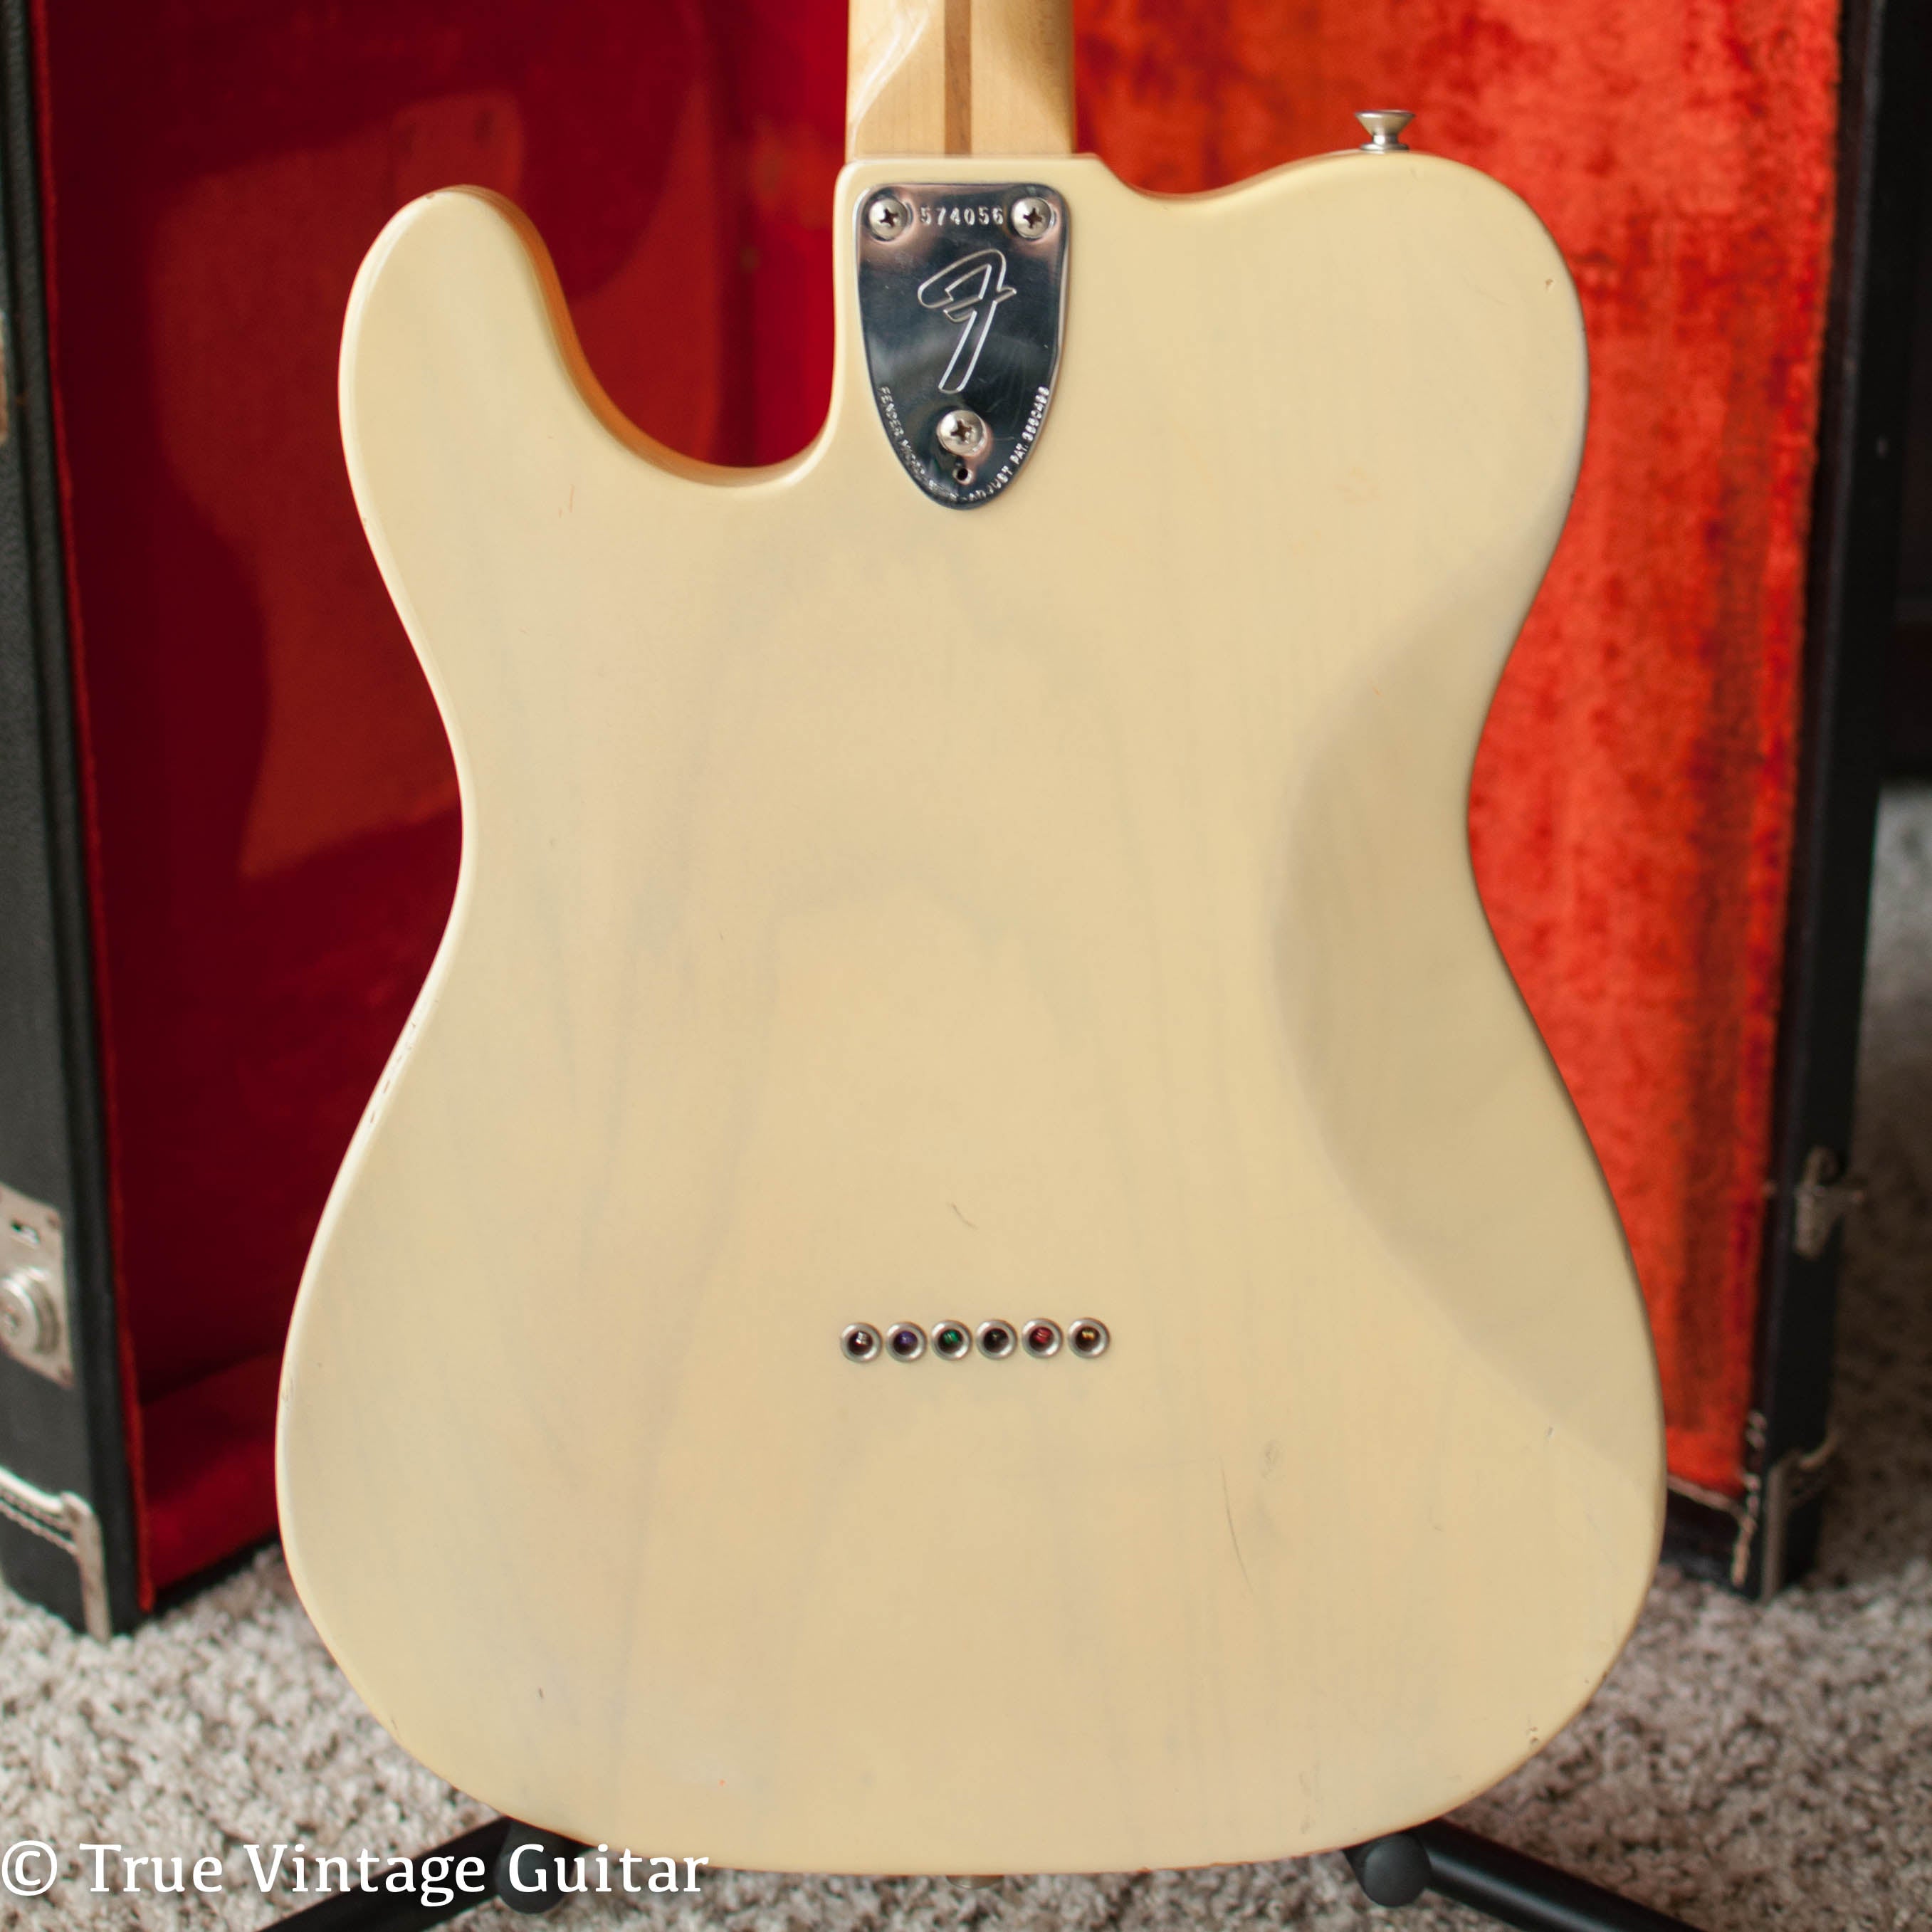 Blond finish Ash body grain visible translucent, Fender Telecaster Deluxe 1974